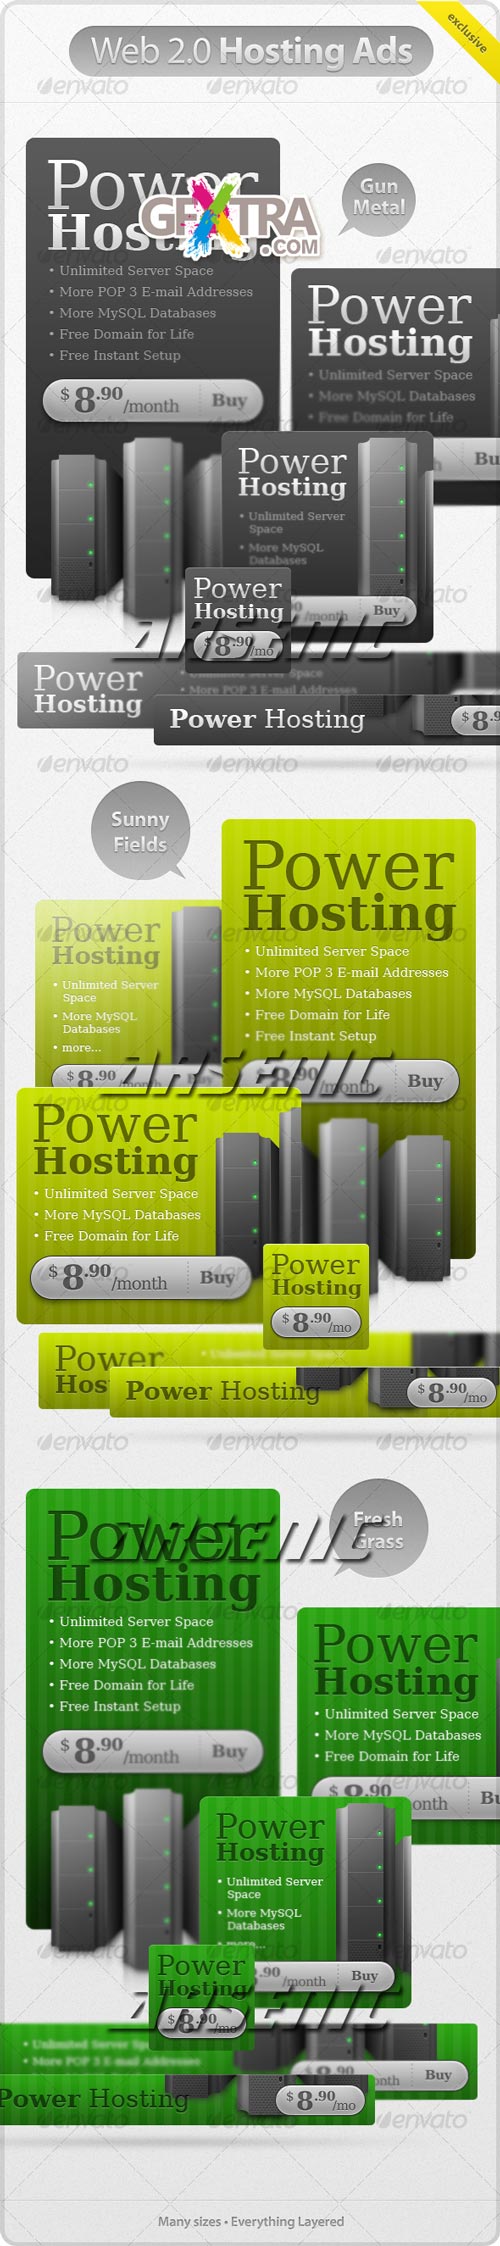 Power Hosting Ads - GraphicRiver - REUPLOADED!